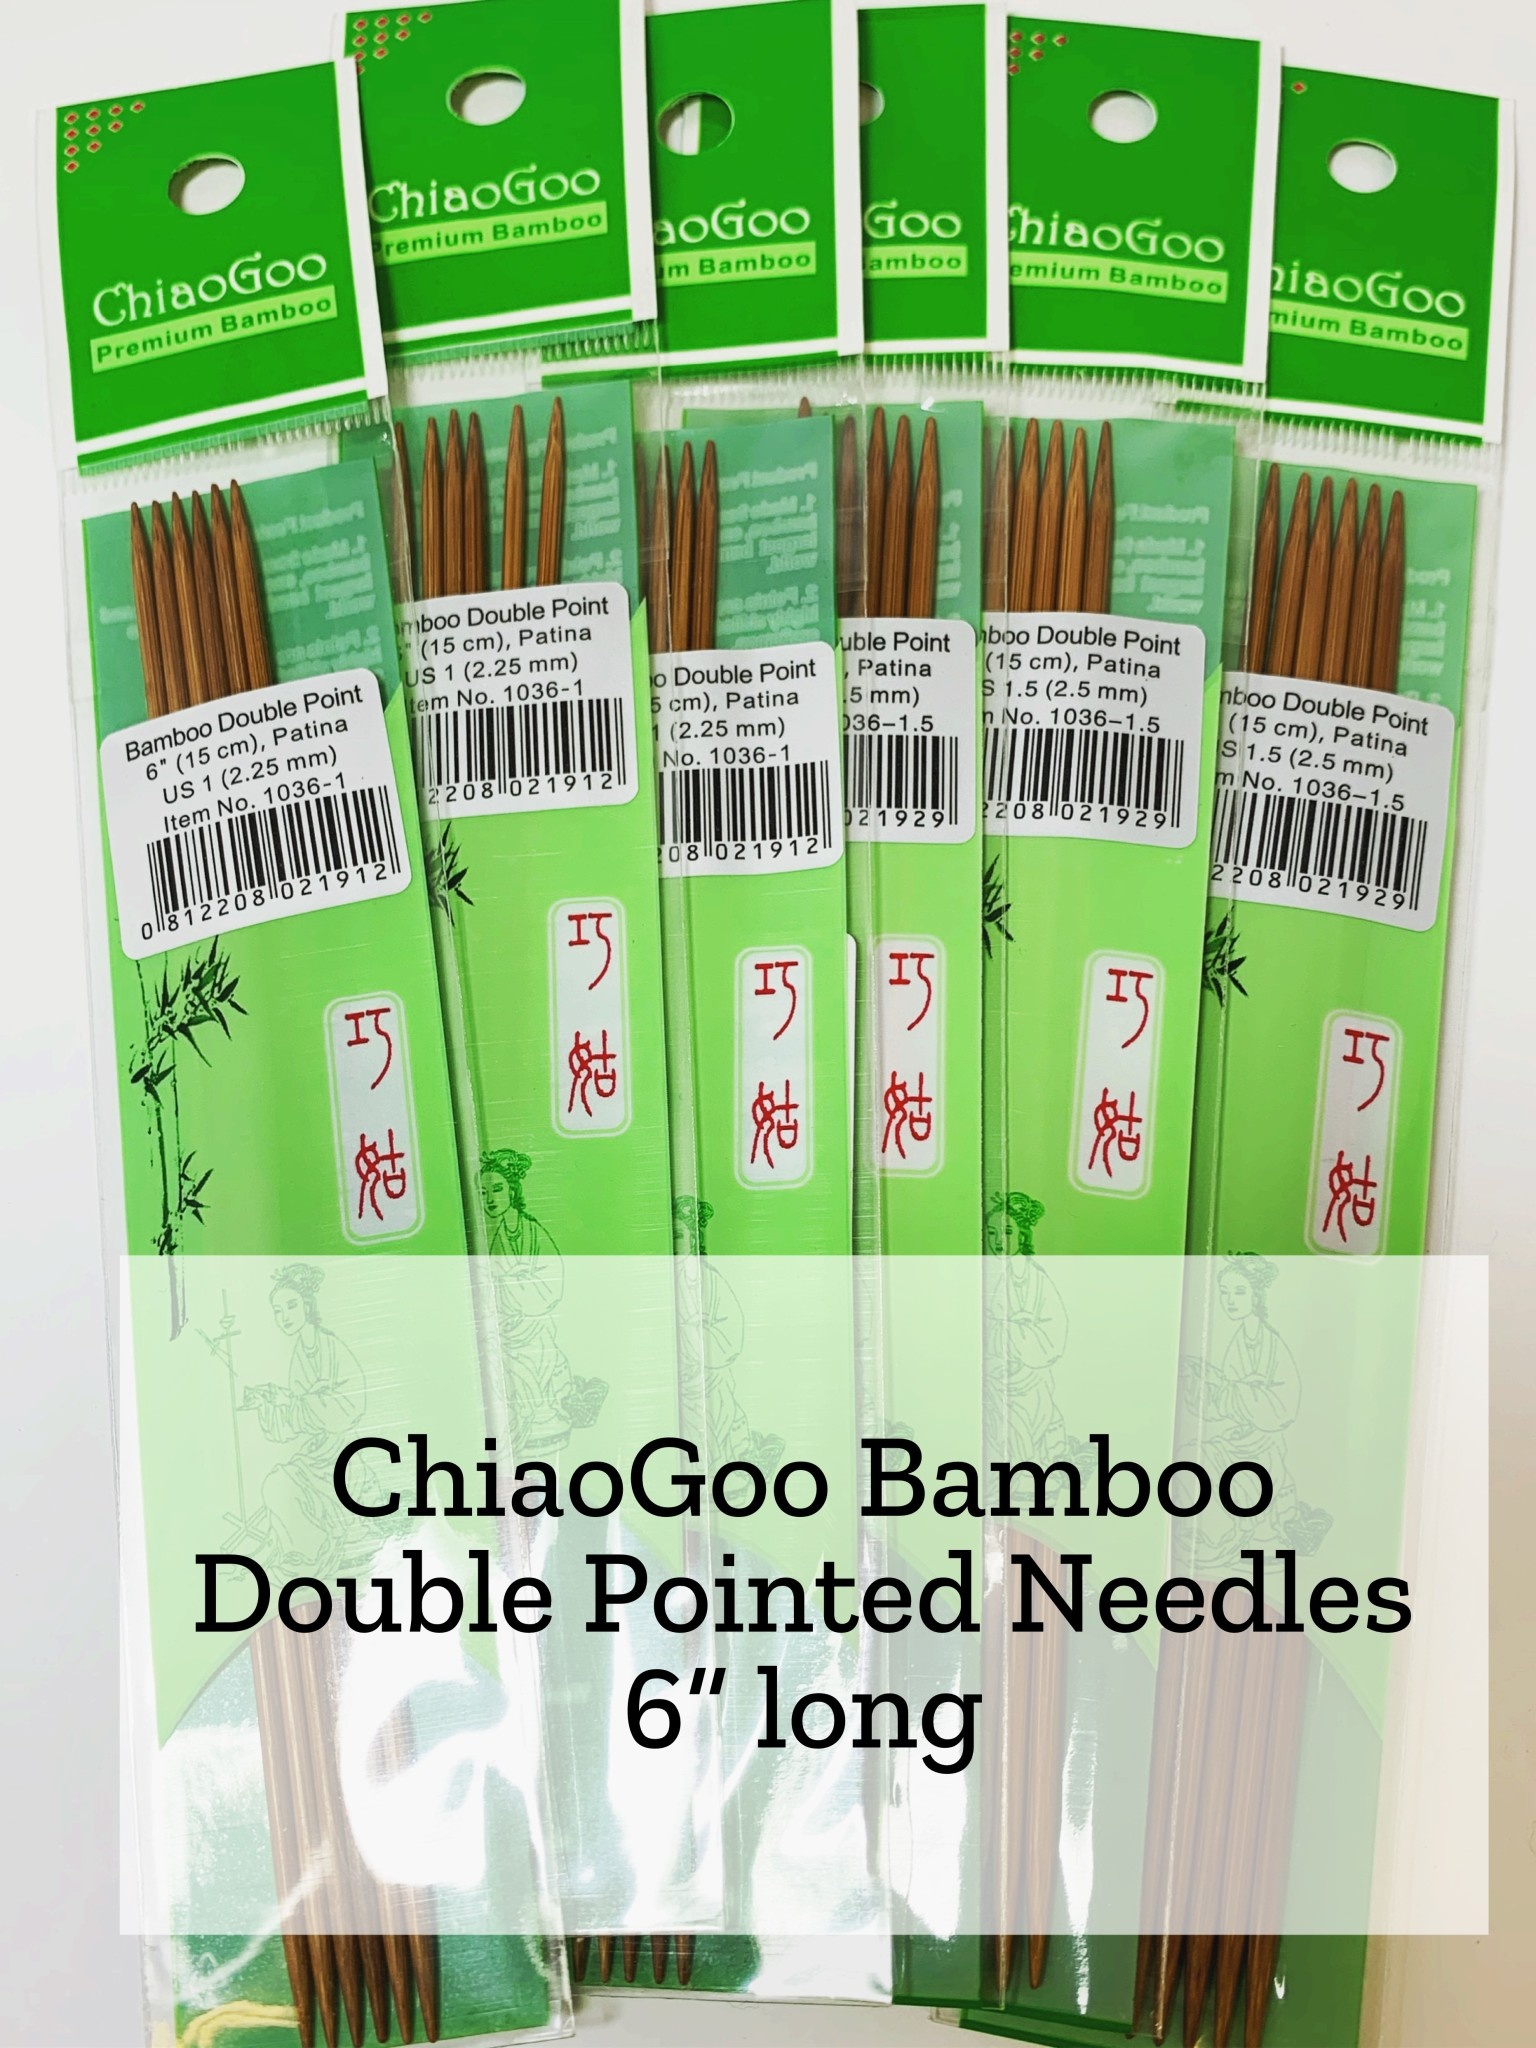 ChiaoGoo Bamboo DPN - 6” -  5 mm